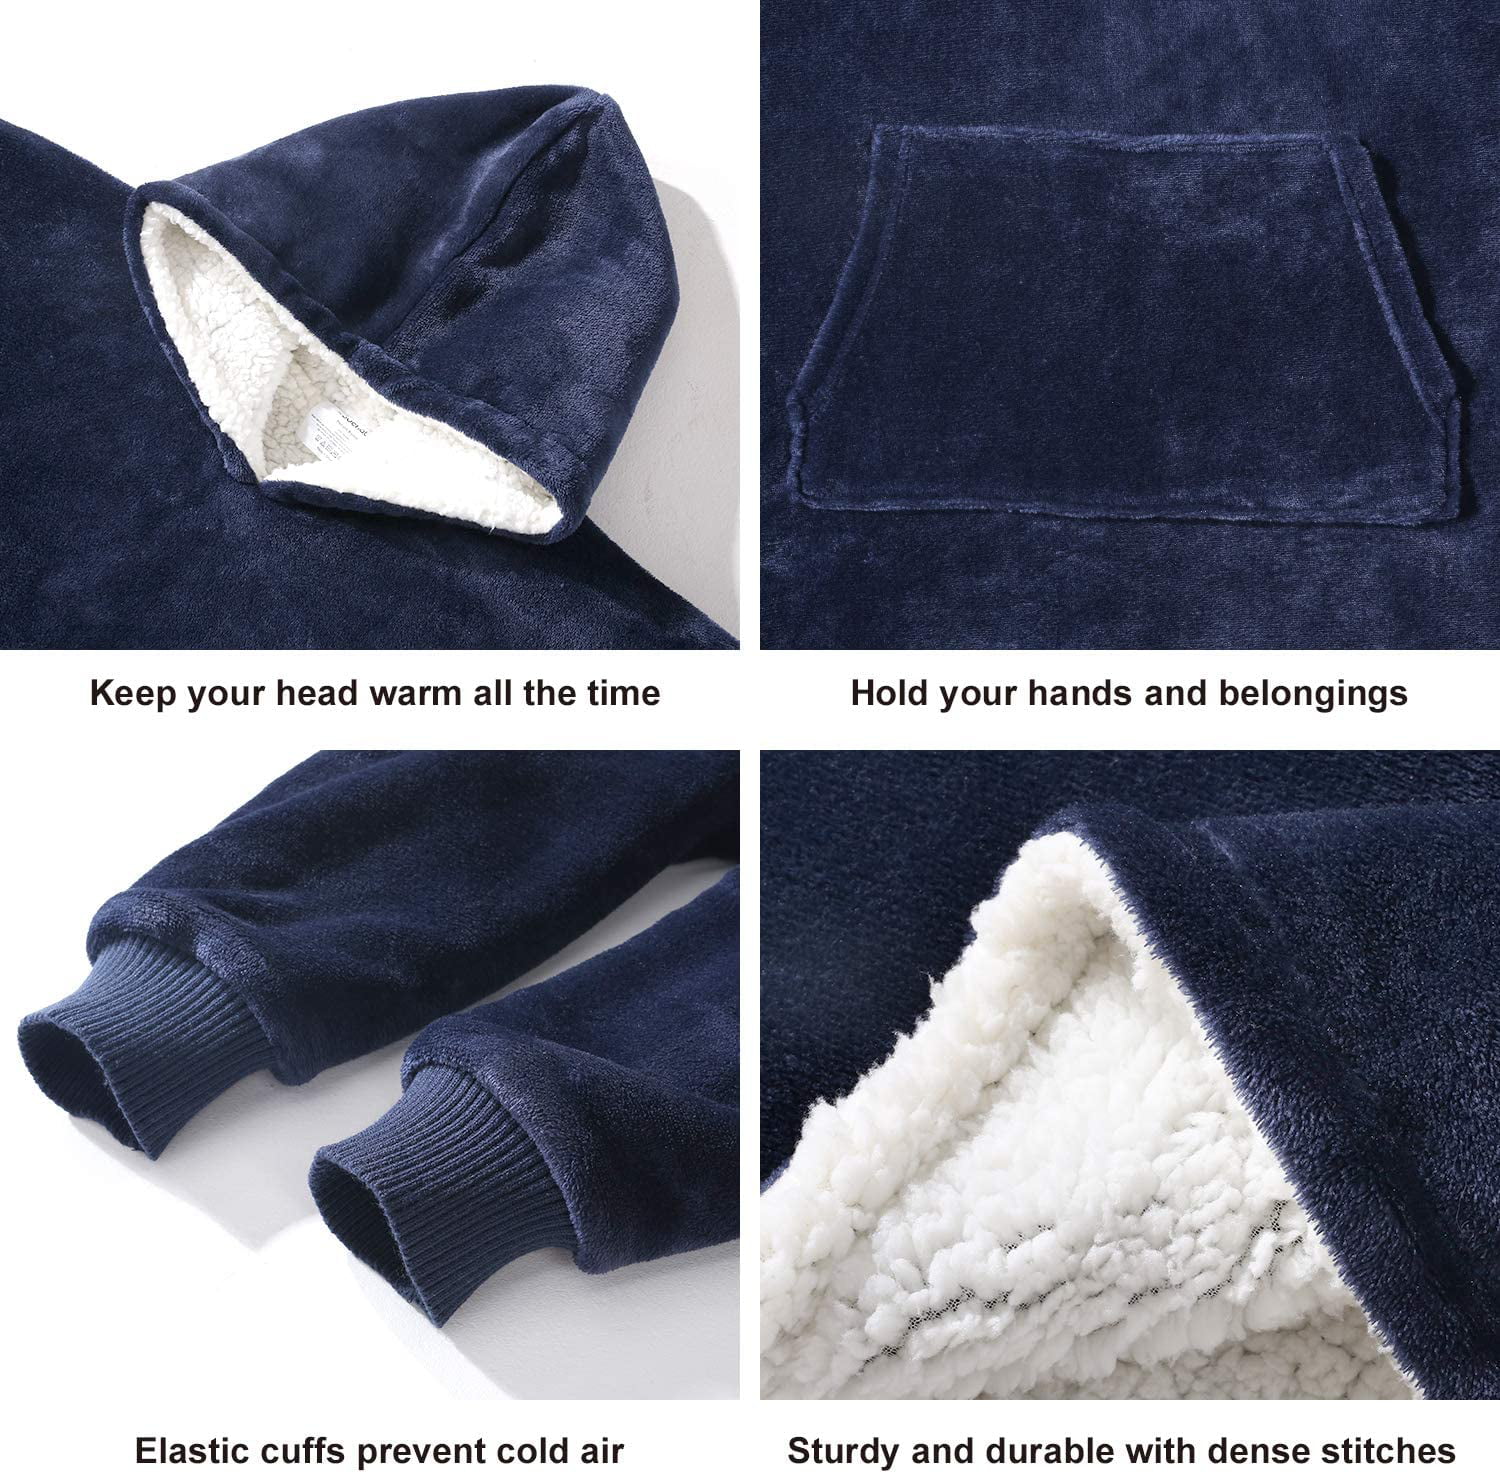  Touchat Wearable Blanket Hoodie, Oversized Sherpa